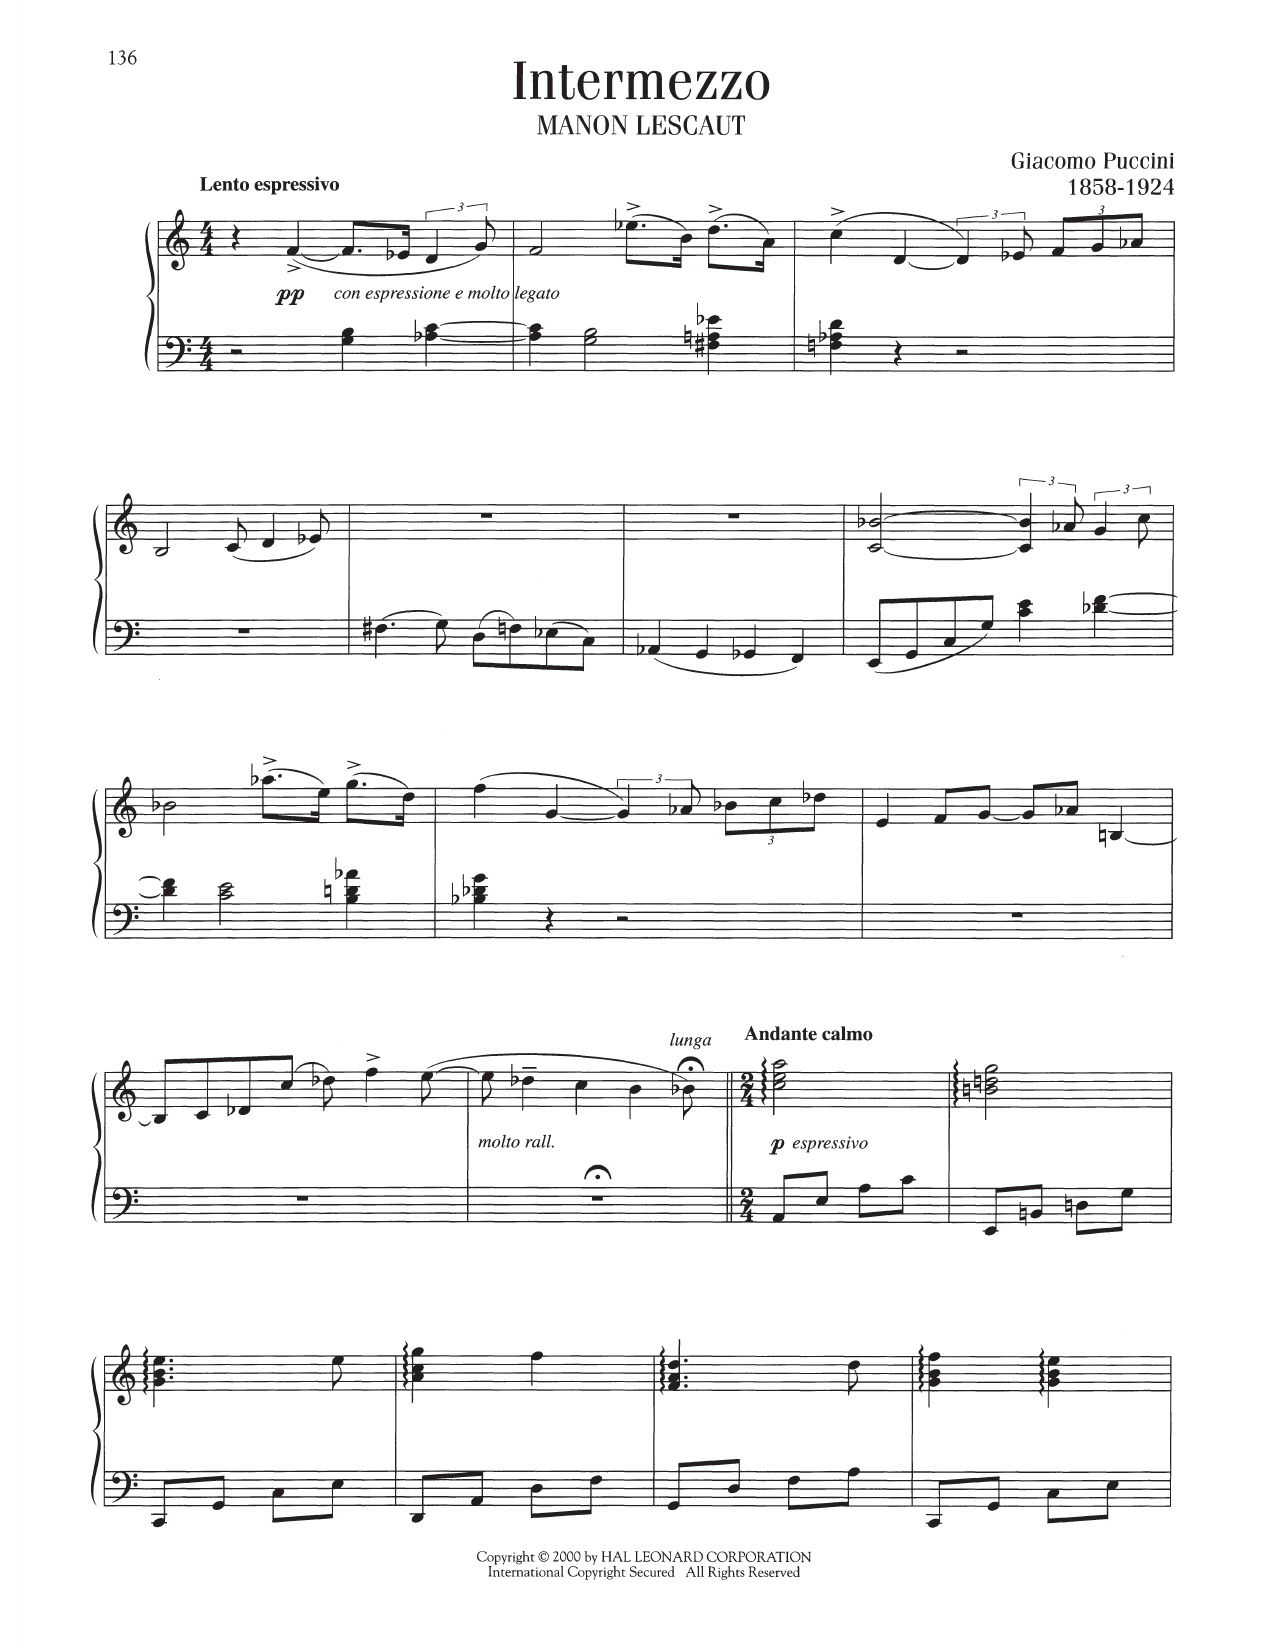 Giacomo Puccini Intermezzo sheet music notes printable PDF score